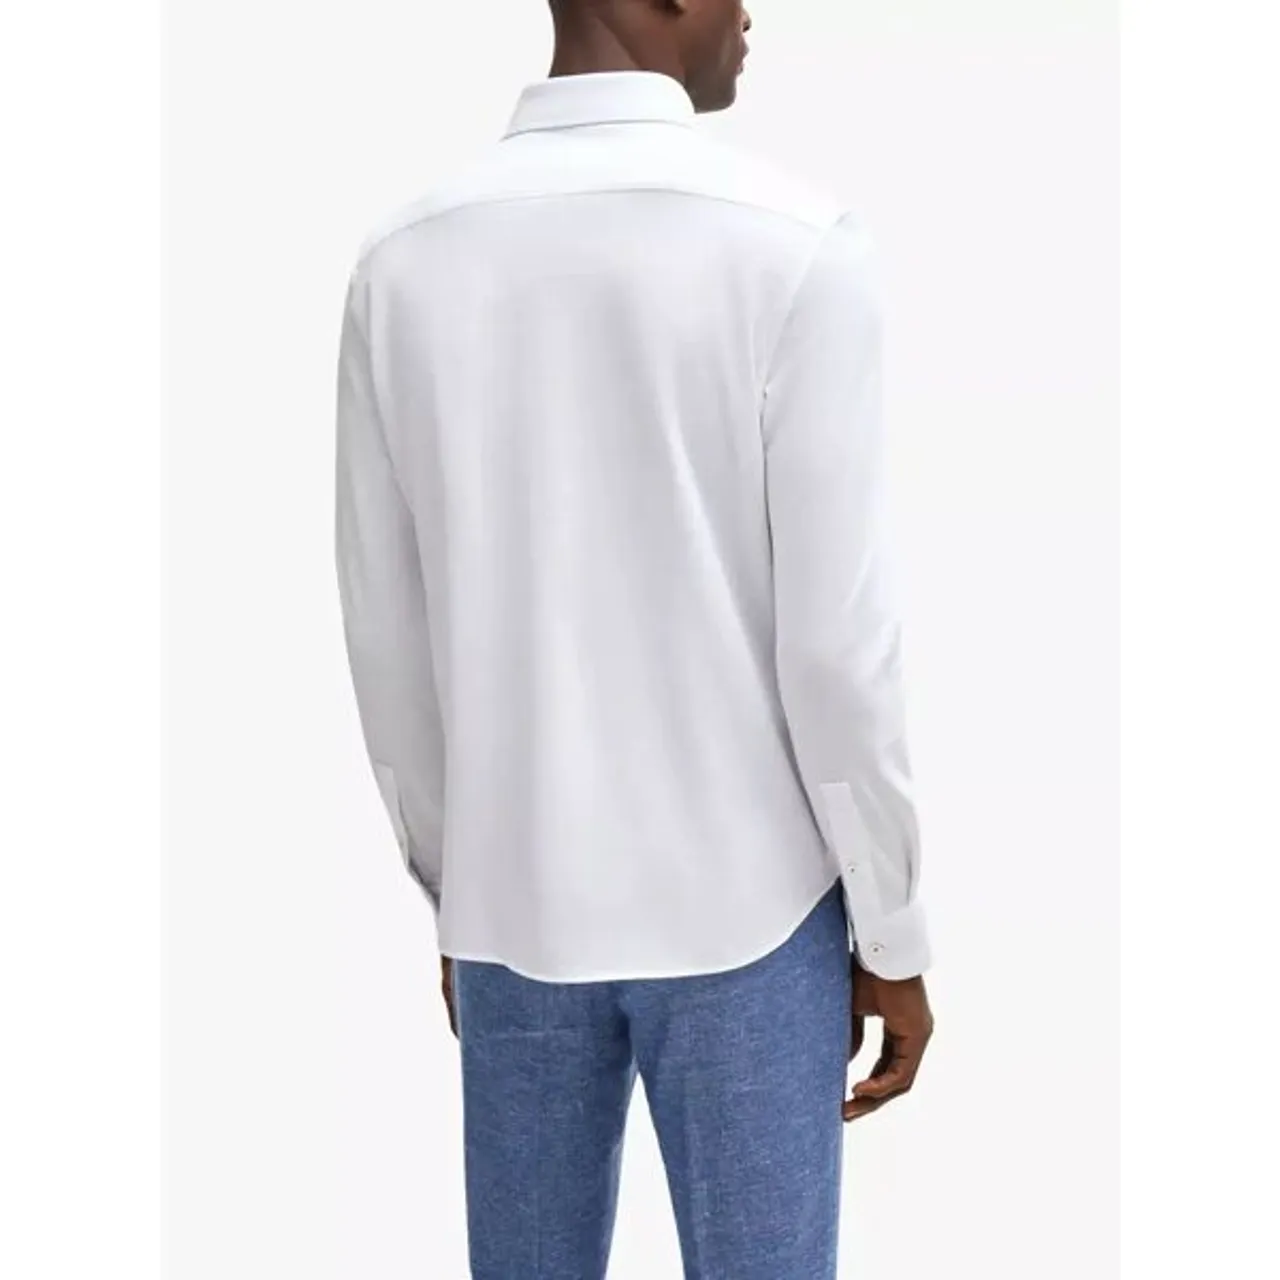 Hugo Boss BOSS Casual Fit Long Sleeve Shirt - White - Male